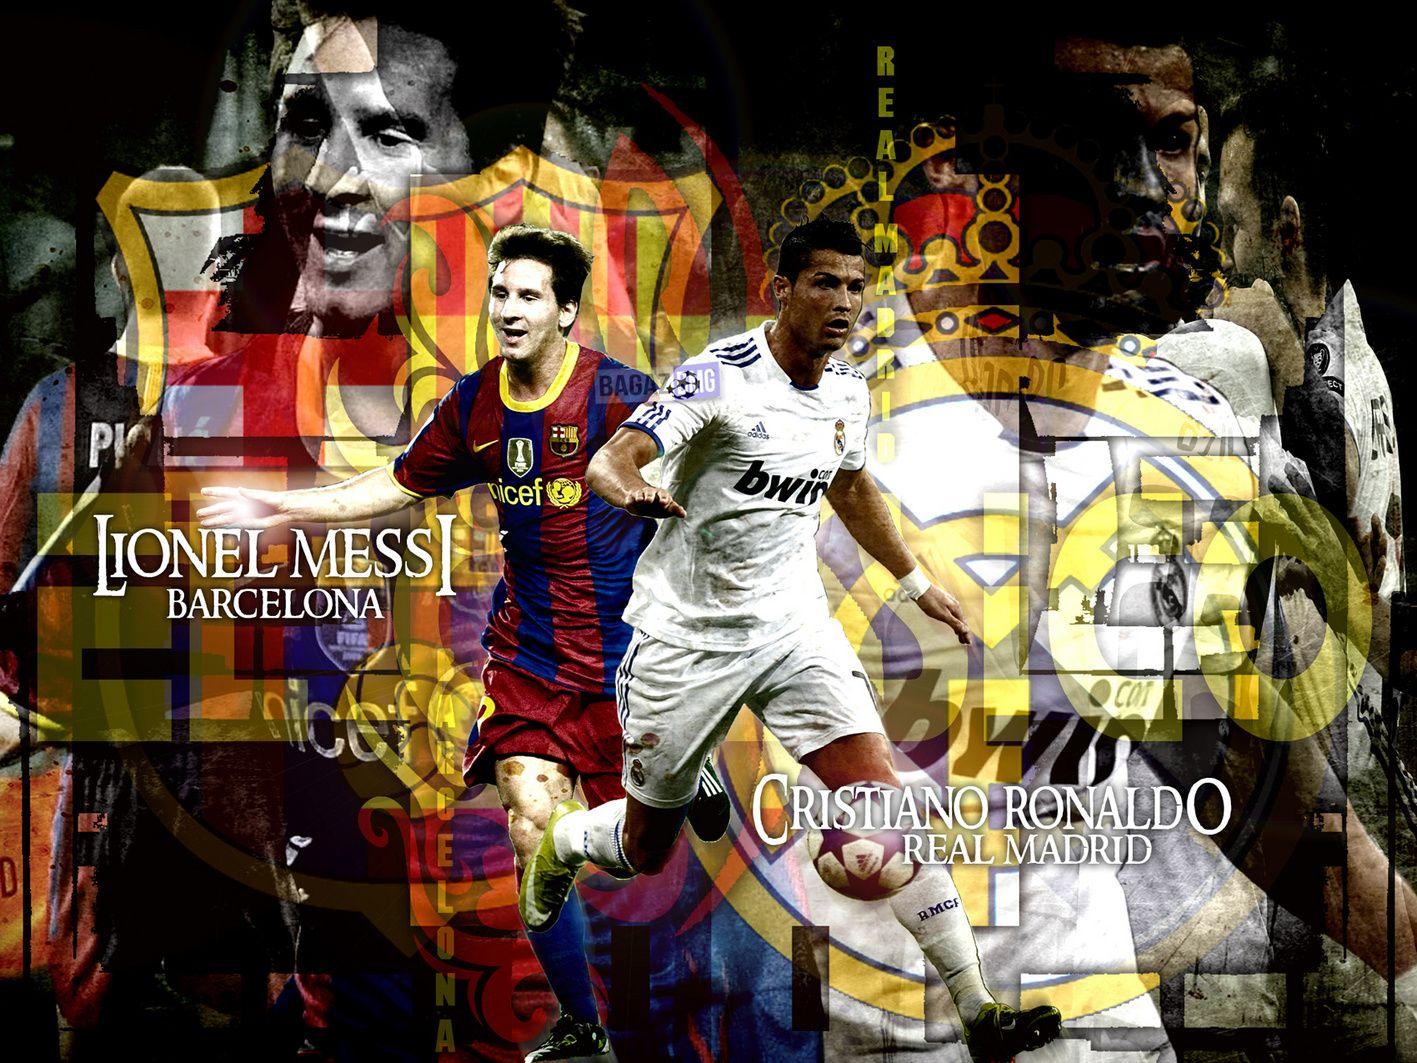 Cristiano Ronaldo Vs Messi 2014 Wallpaper High Quality Resolution